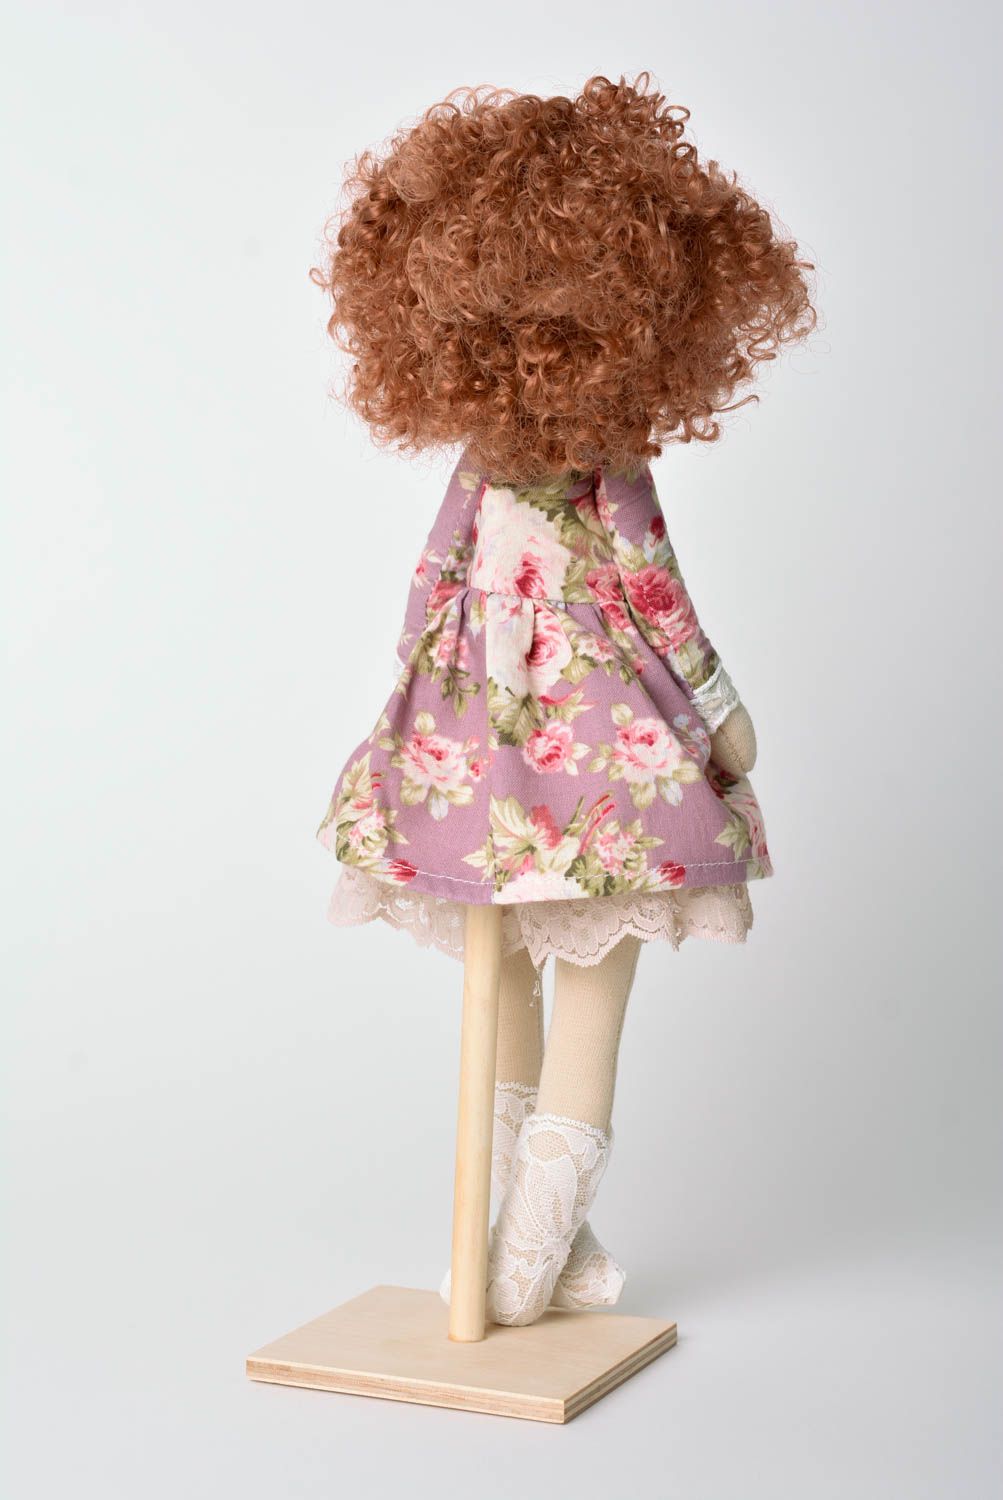 Unusual doll designer toy interior decor ideas gift for children fabric toy photo 5